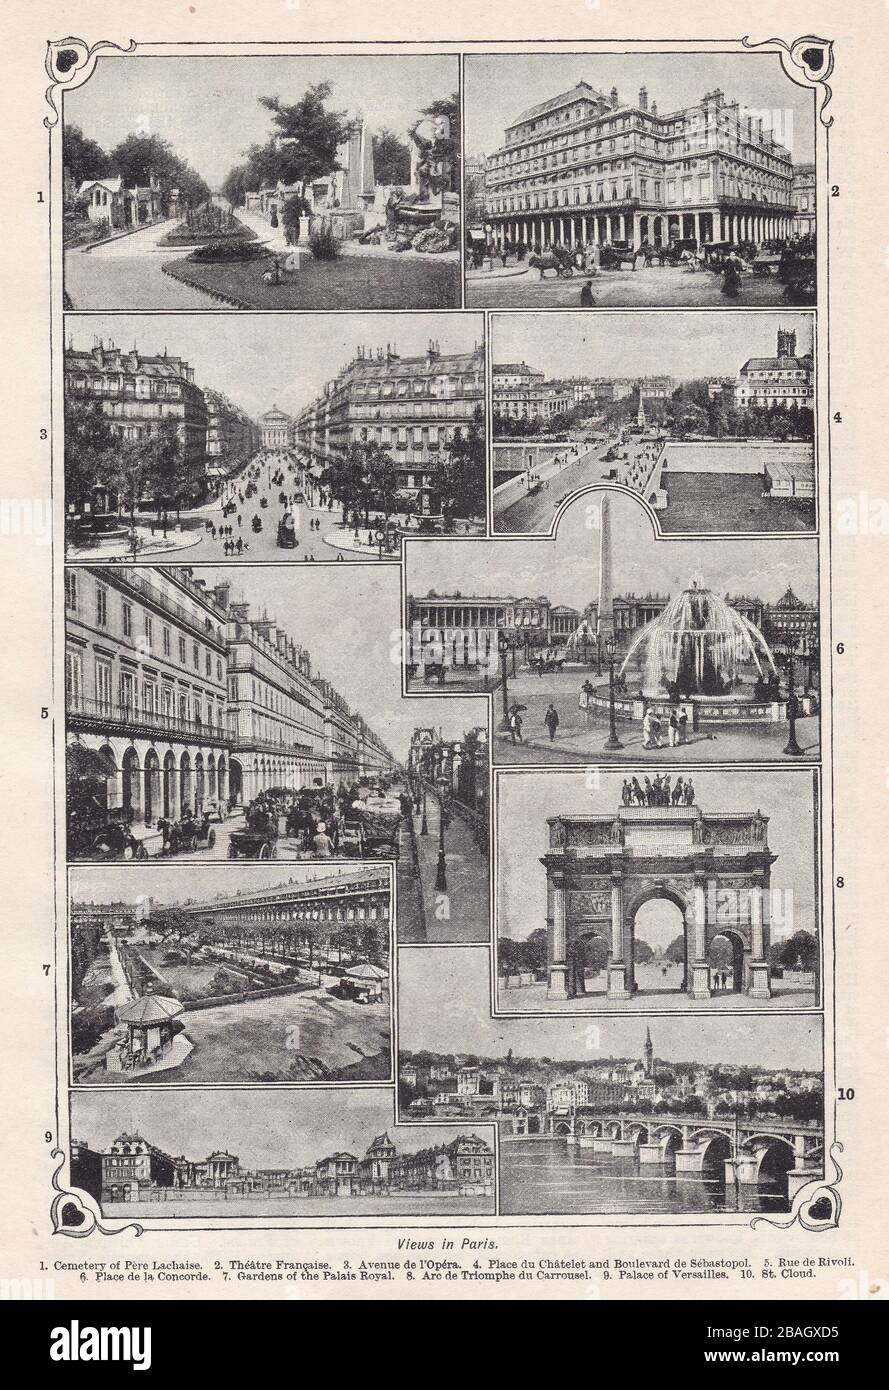 Vintage black and white photos of Views in Paris 1900s. Stock Photo